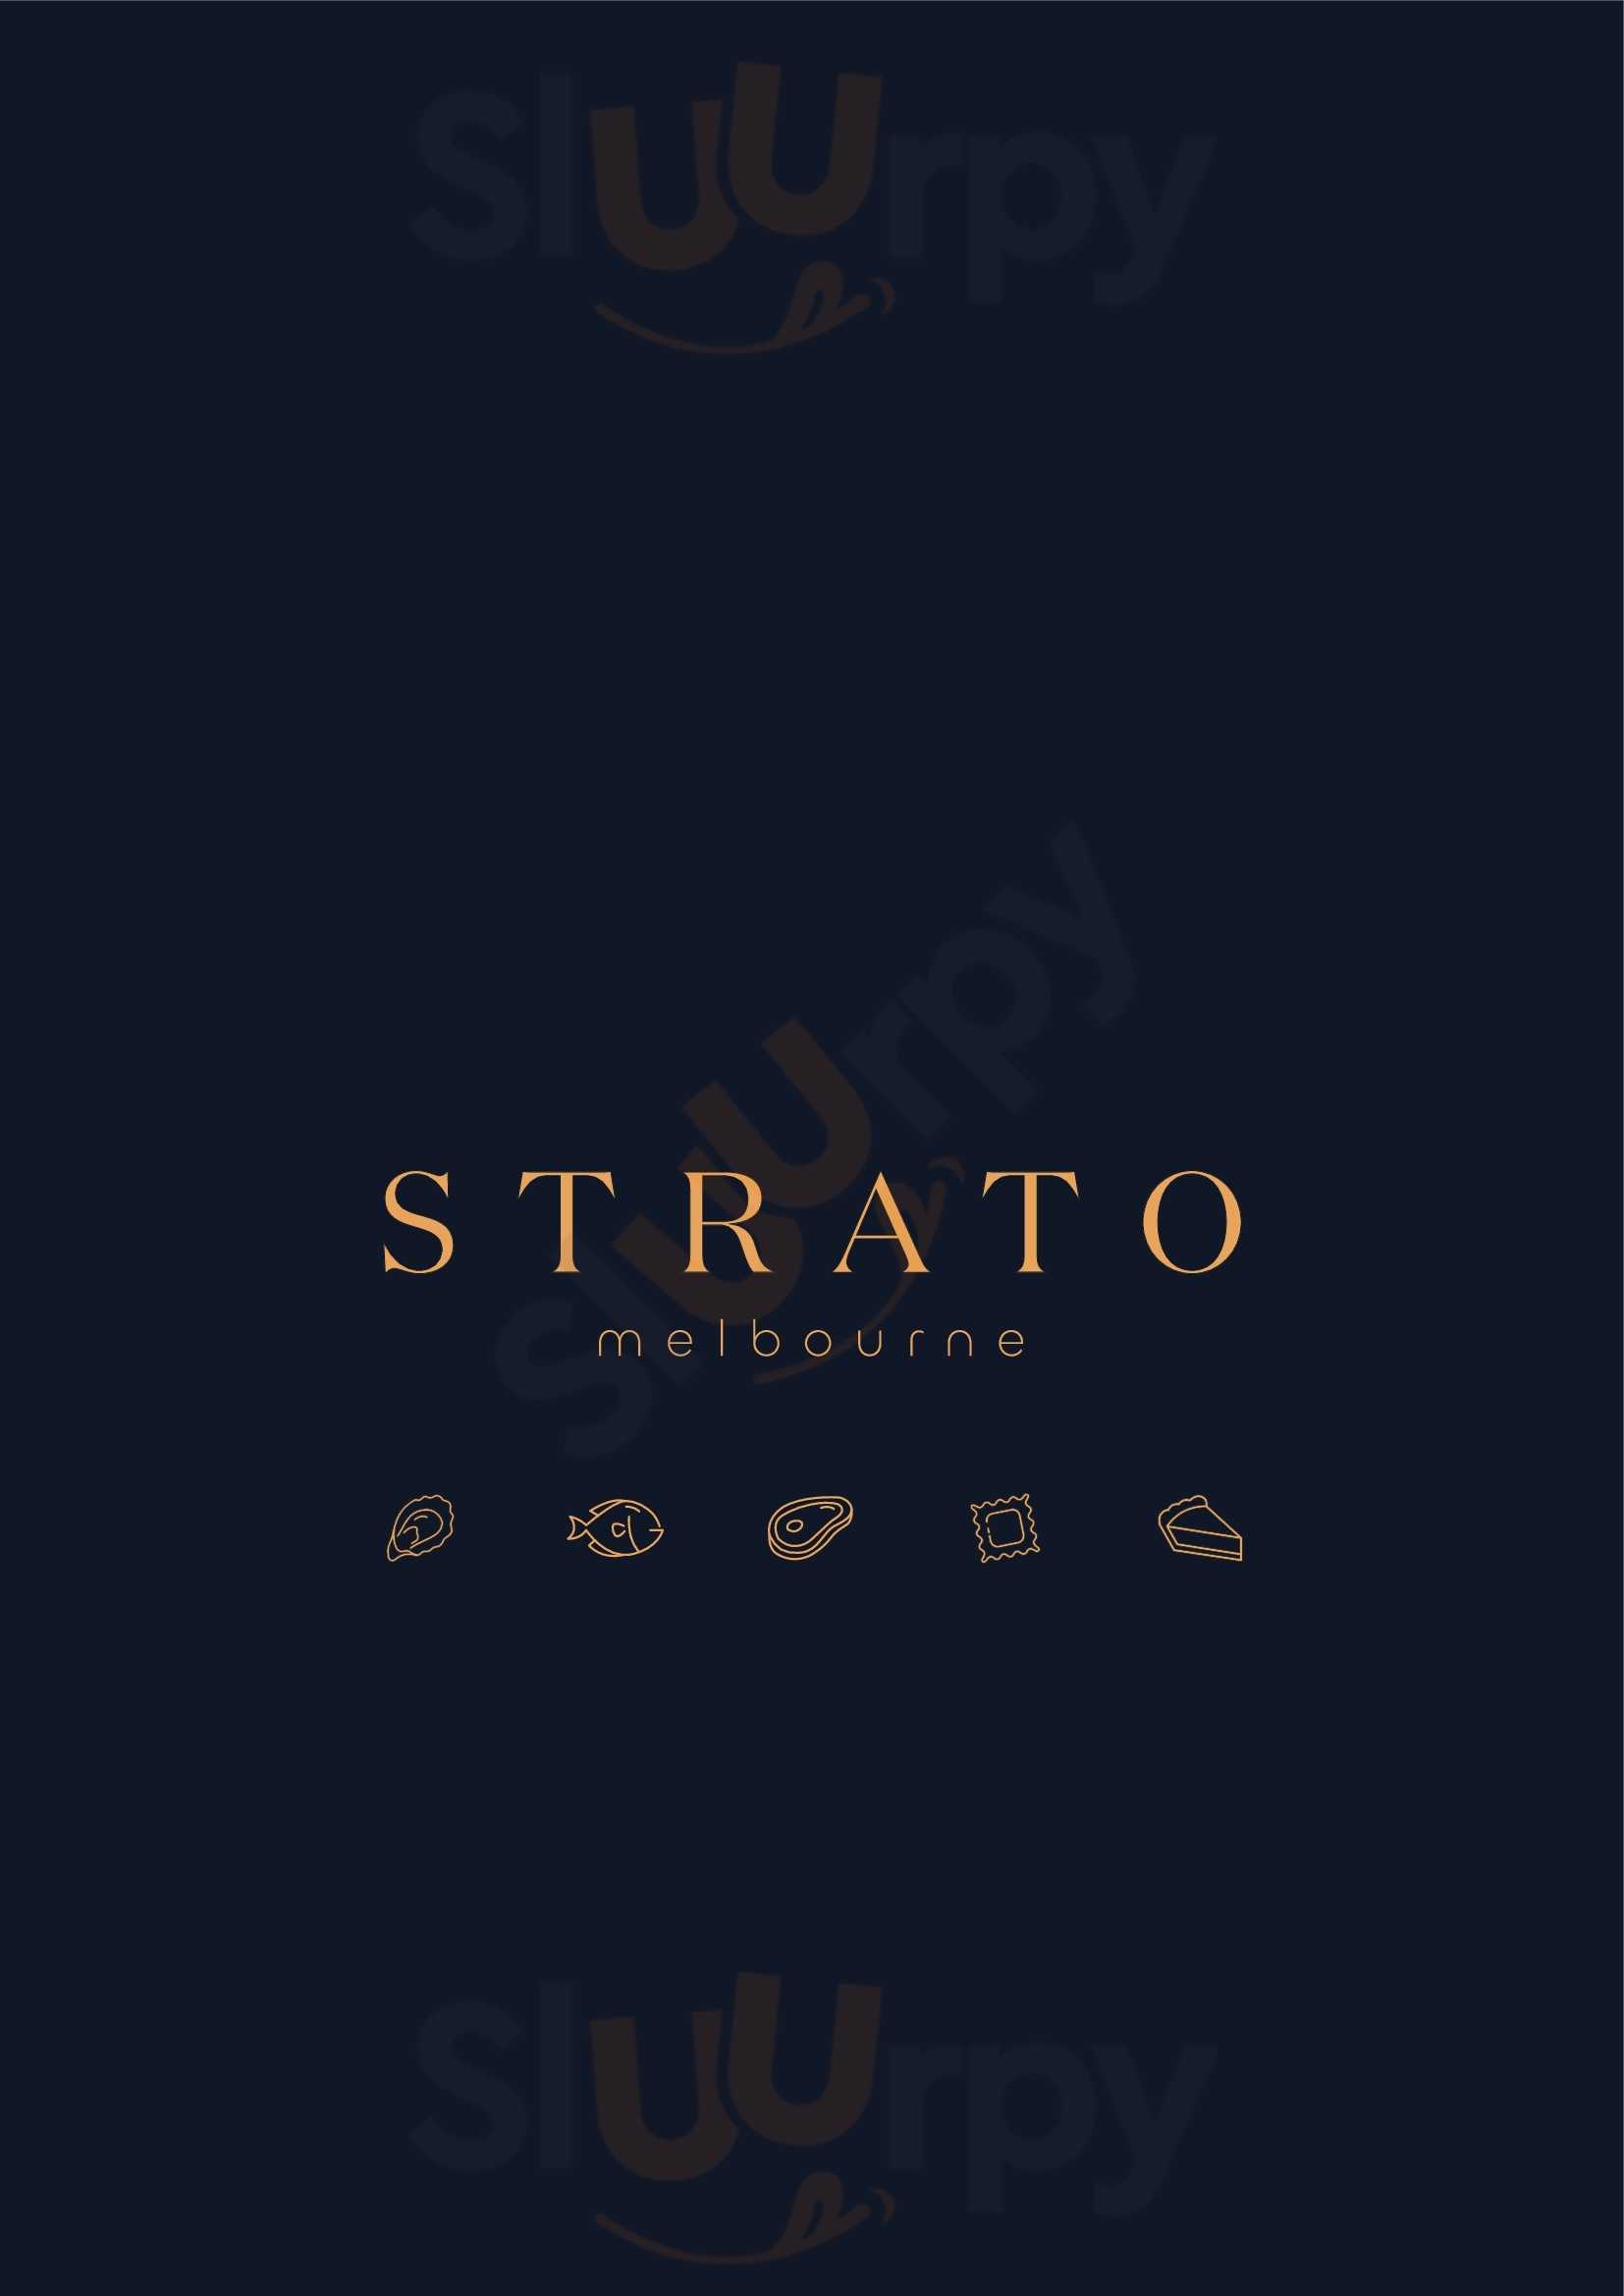 Strato Melbourne - Bar And Restaurant Melbourne Menu - 1